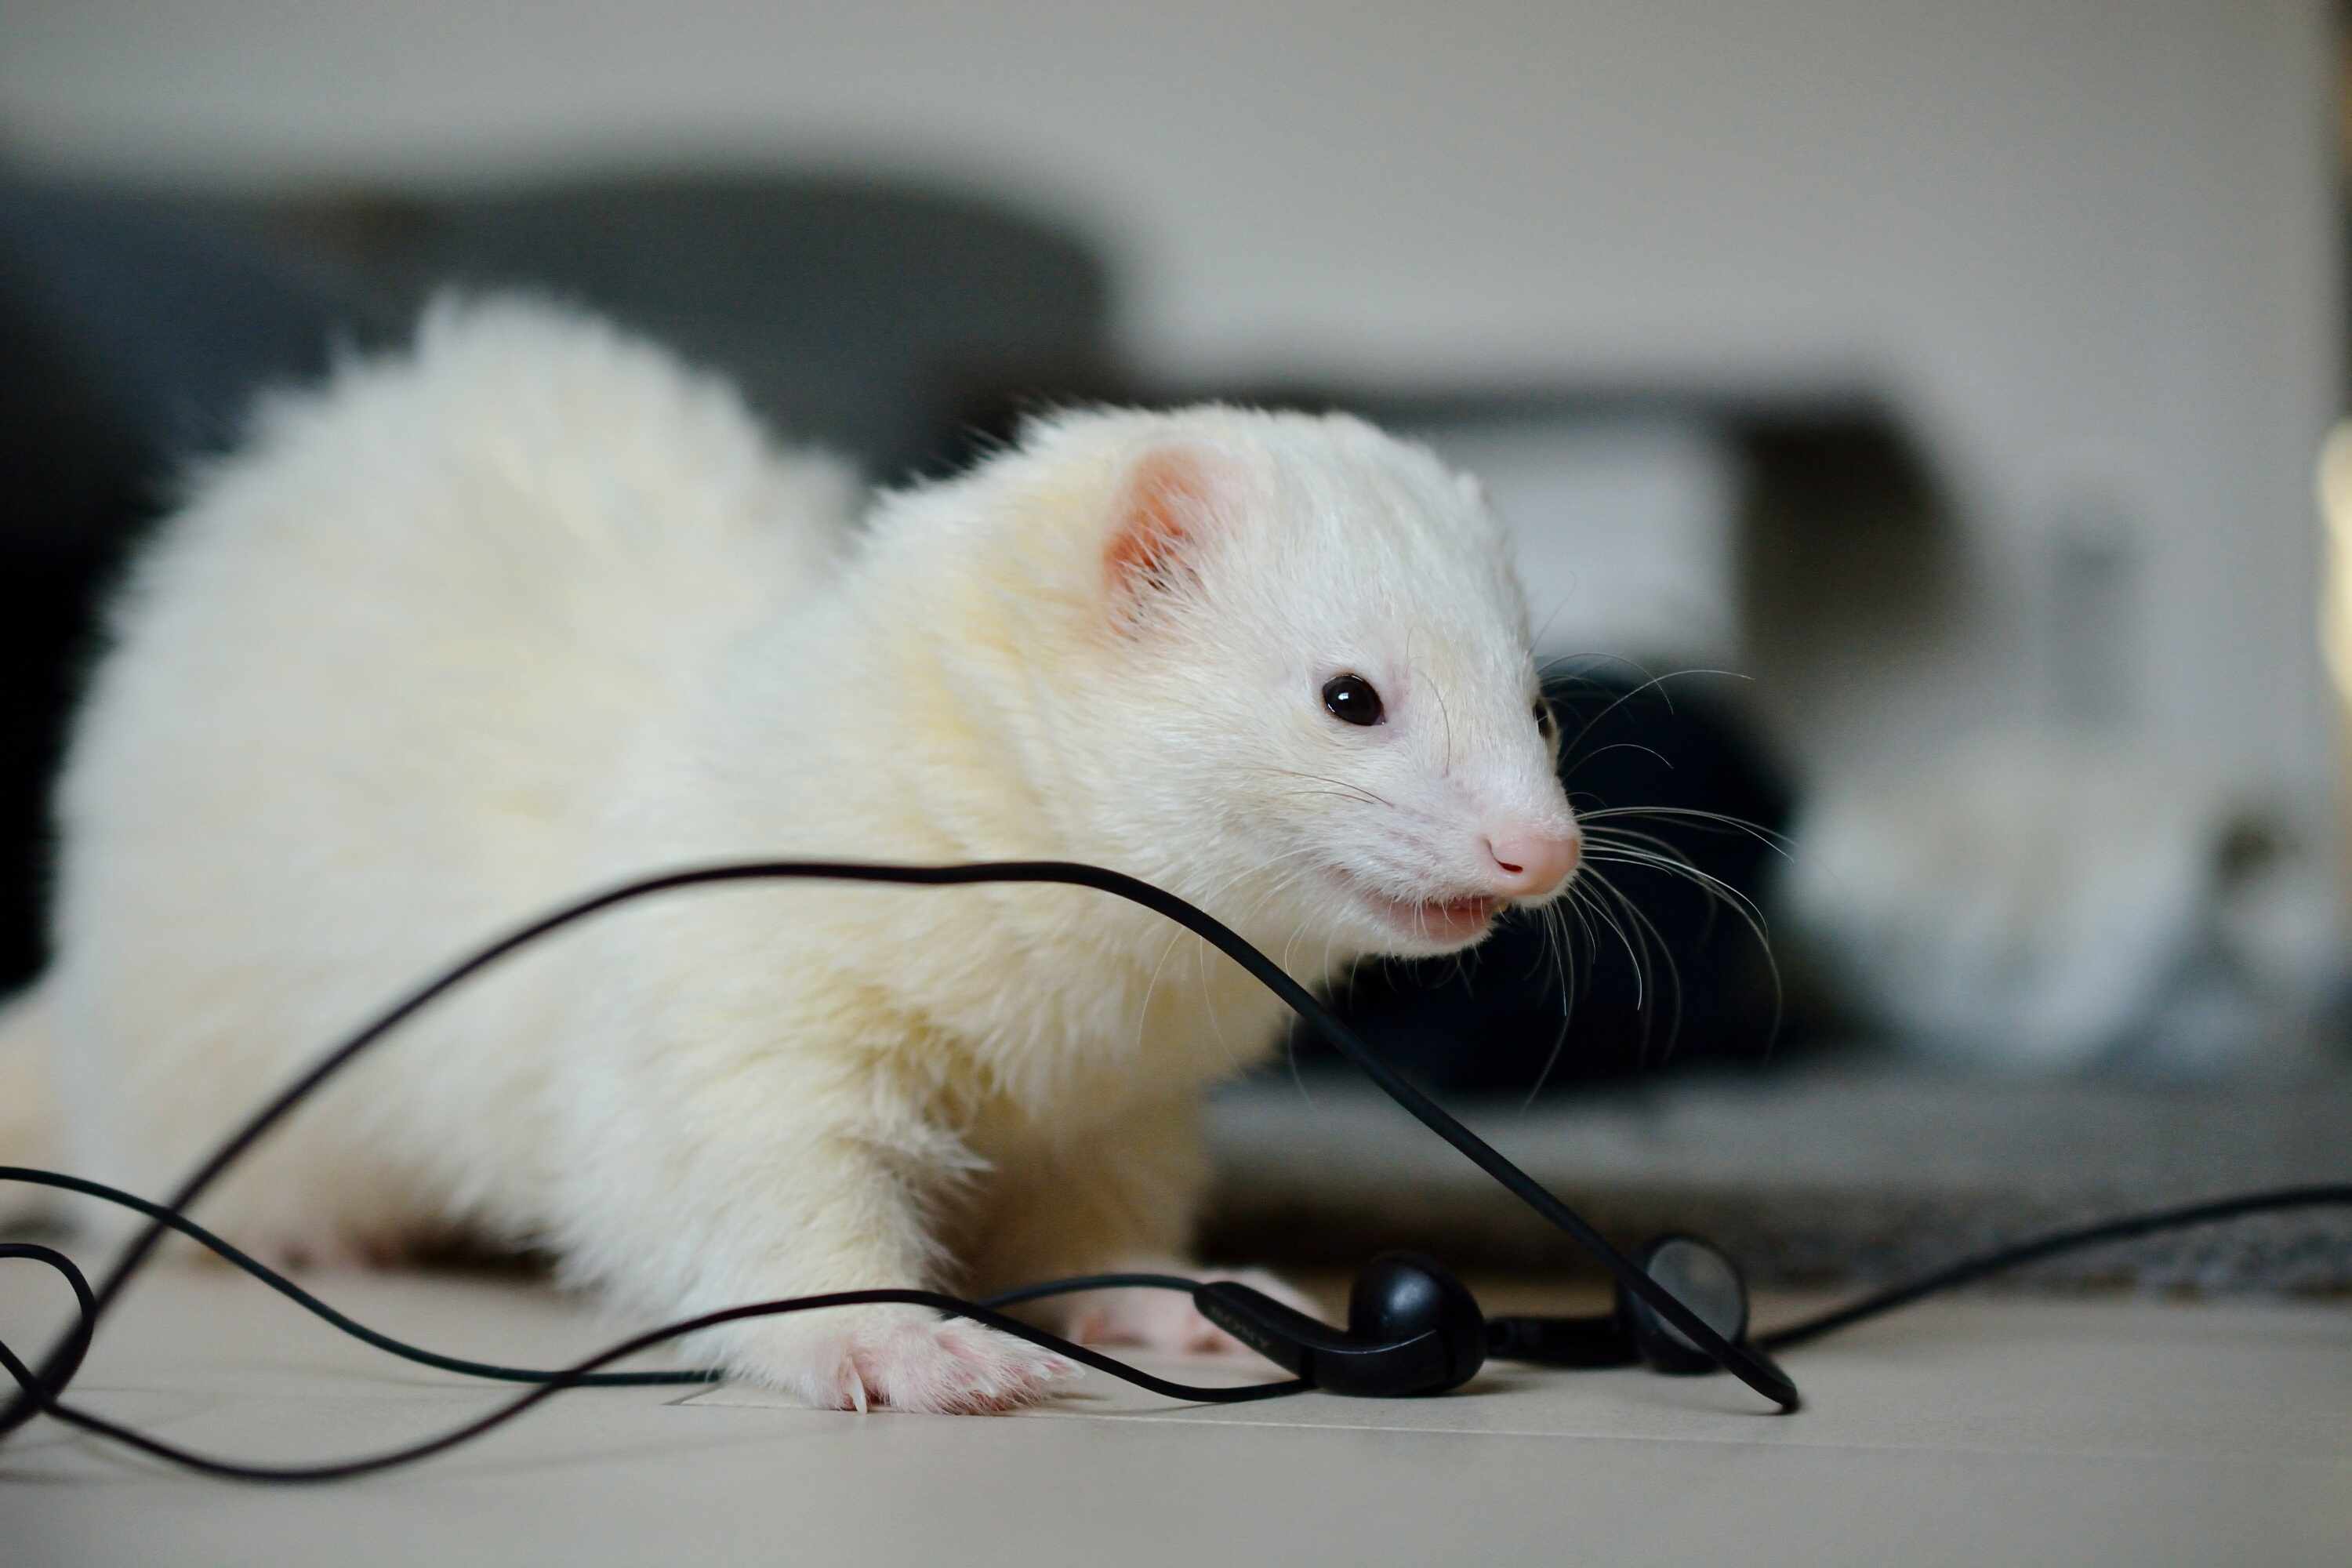 Dark-eyed white ferret with headphones